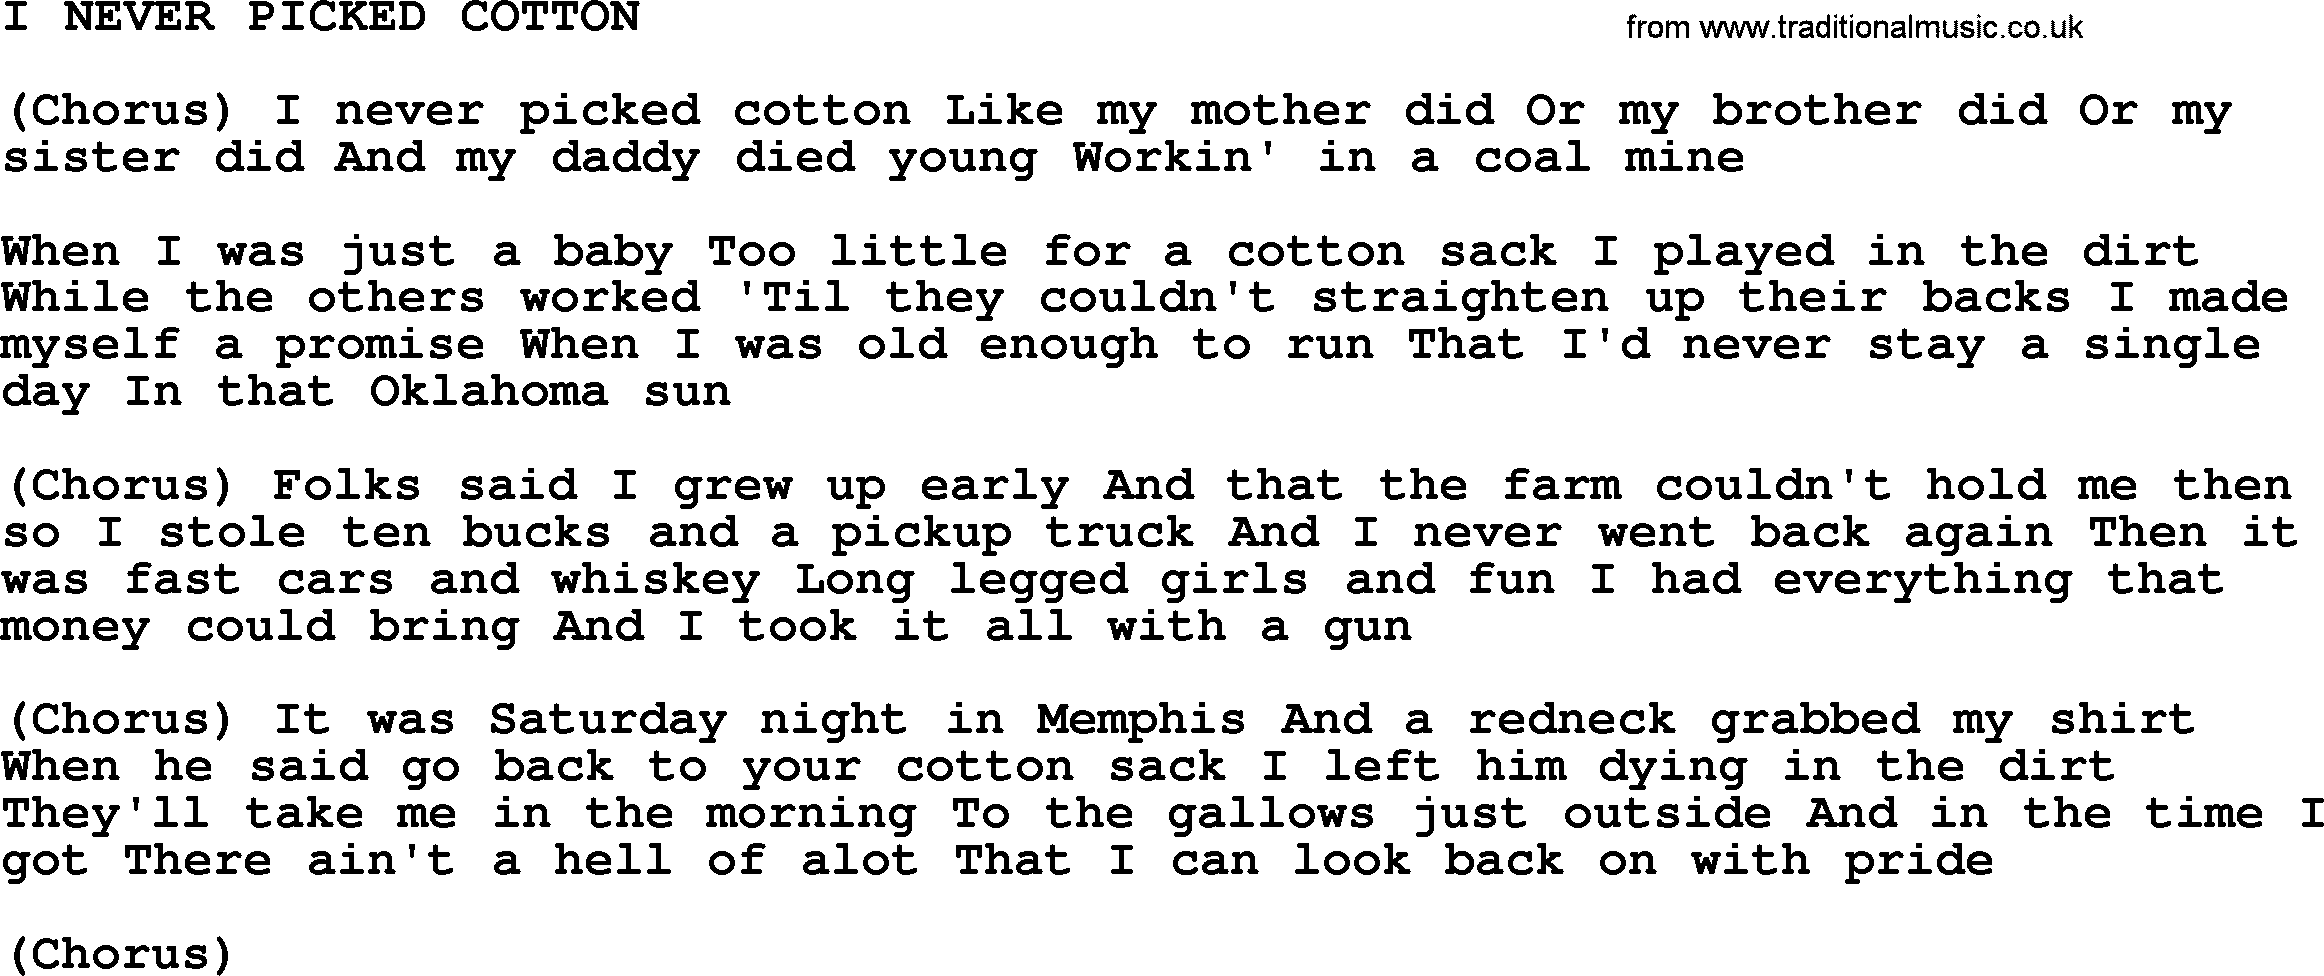 Johnny Cash song I Never Picked Cotton.txt lyrics